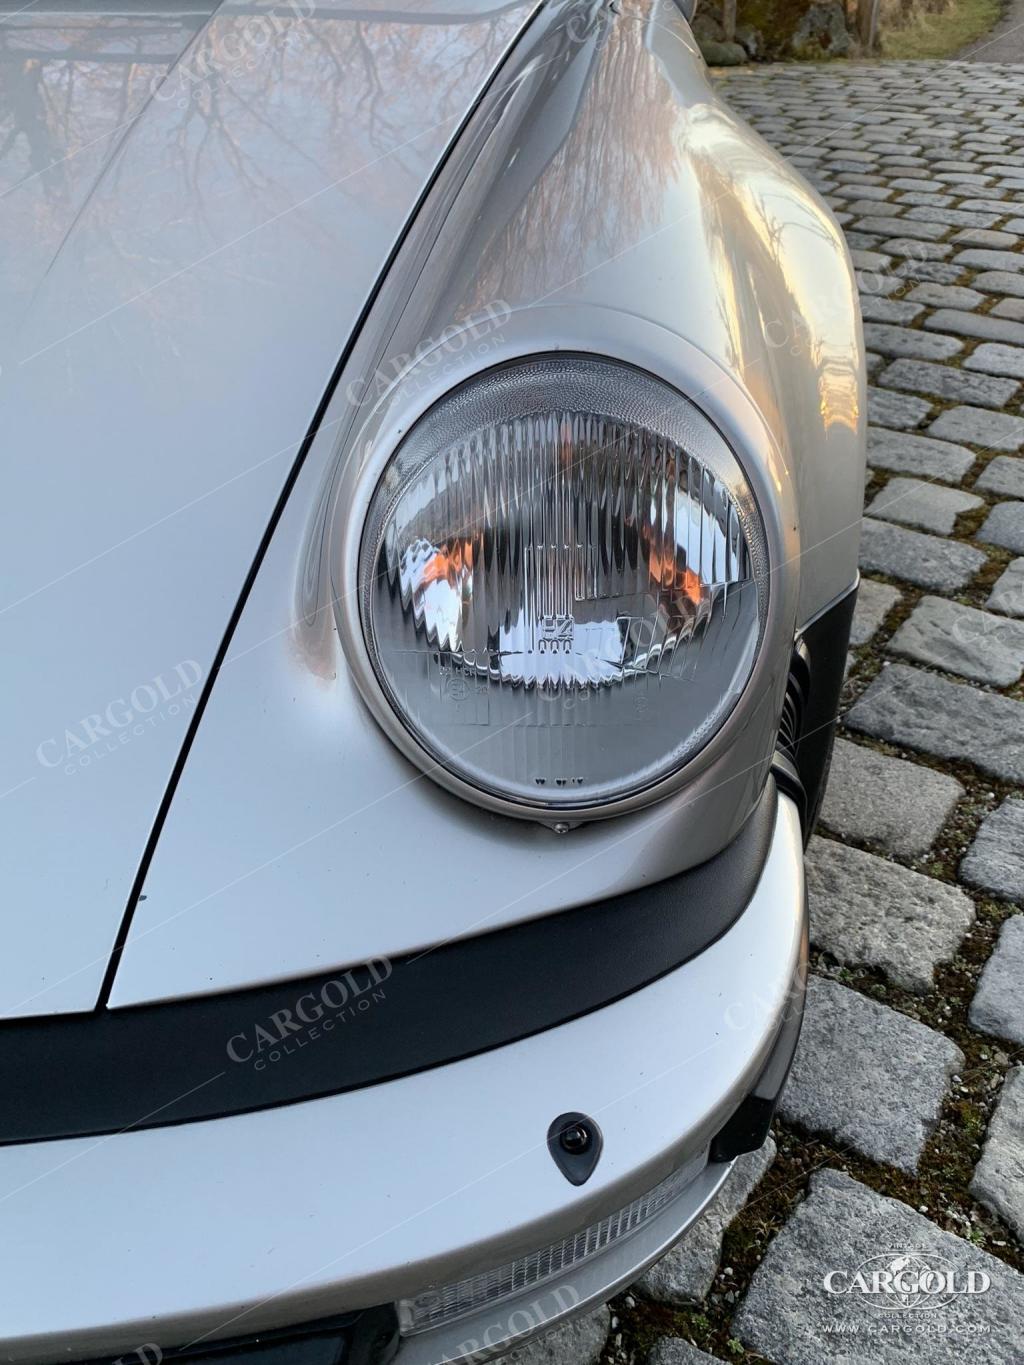 Cargold - Porsche 911 Turbo - Originalzustand  - Bild 21